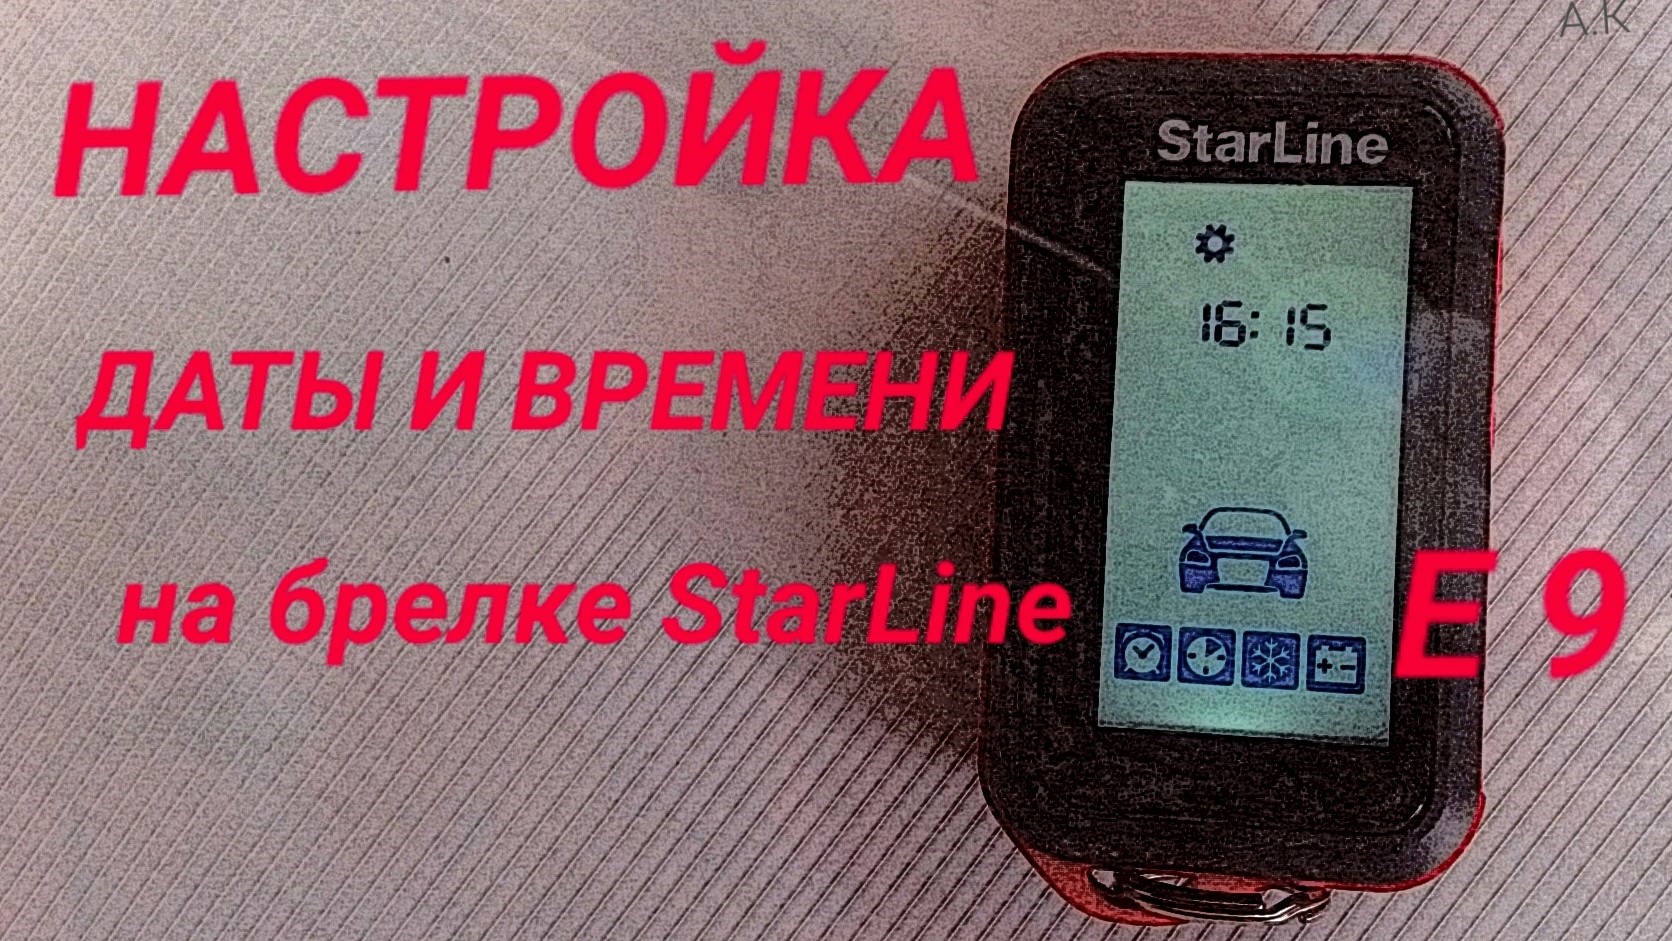 Как установить часы на брелке. STARLINE e96 v2 брелок. Брелок сигнализации старлайн е 96. STARLINE a96 v2 брелок. Брелок сигнализации STARLINE е96.